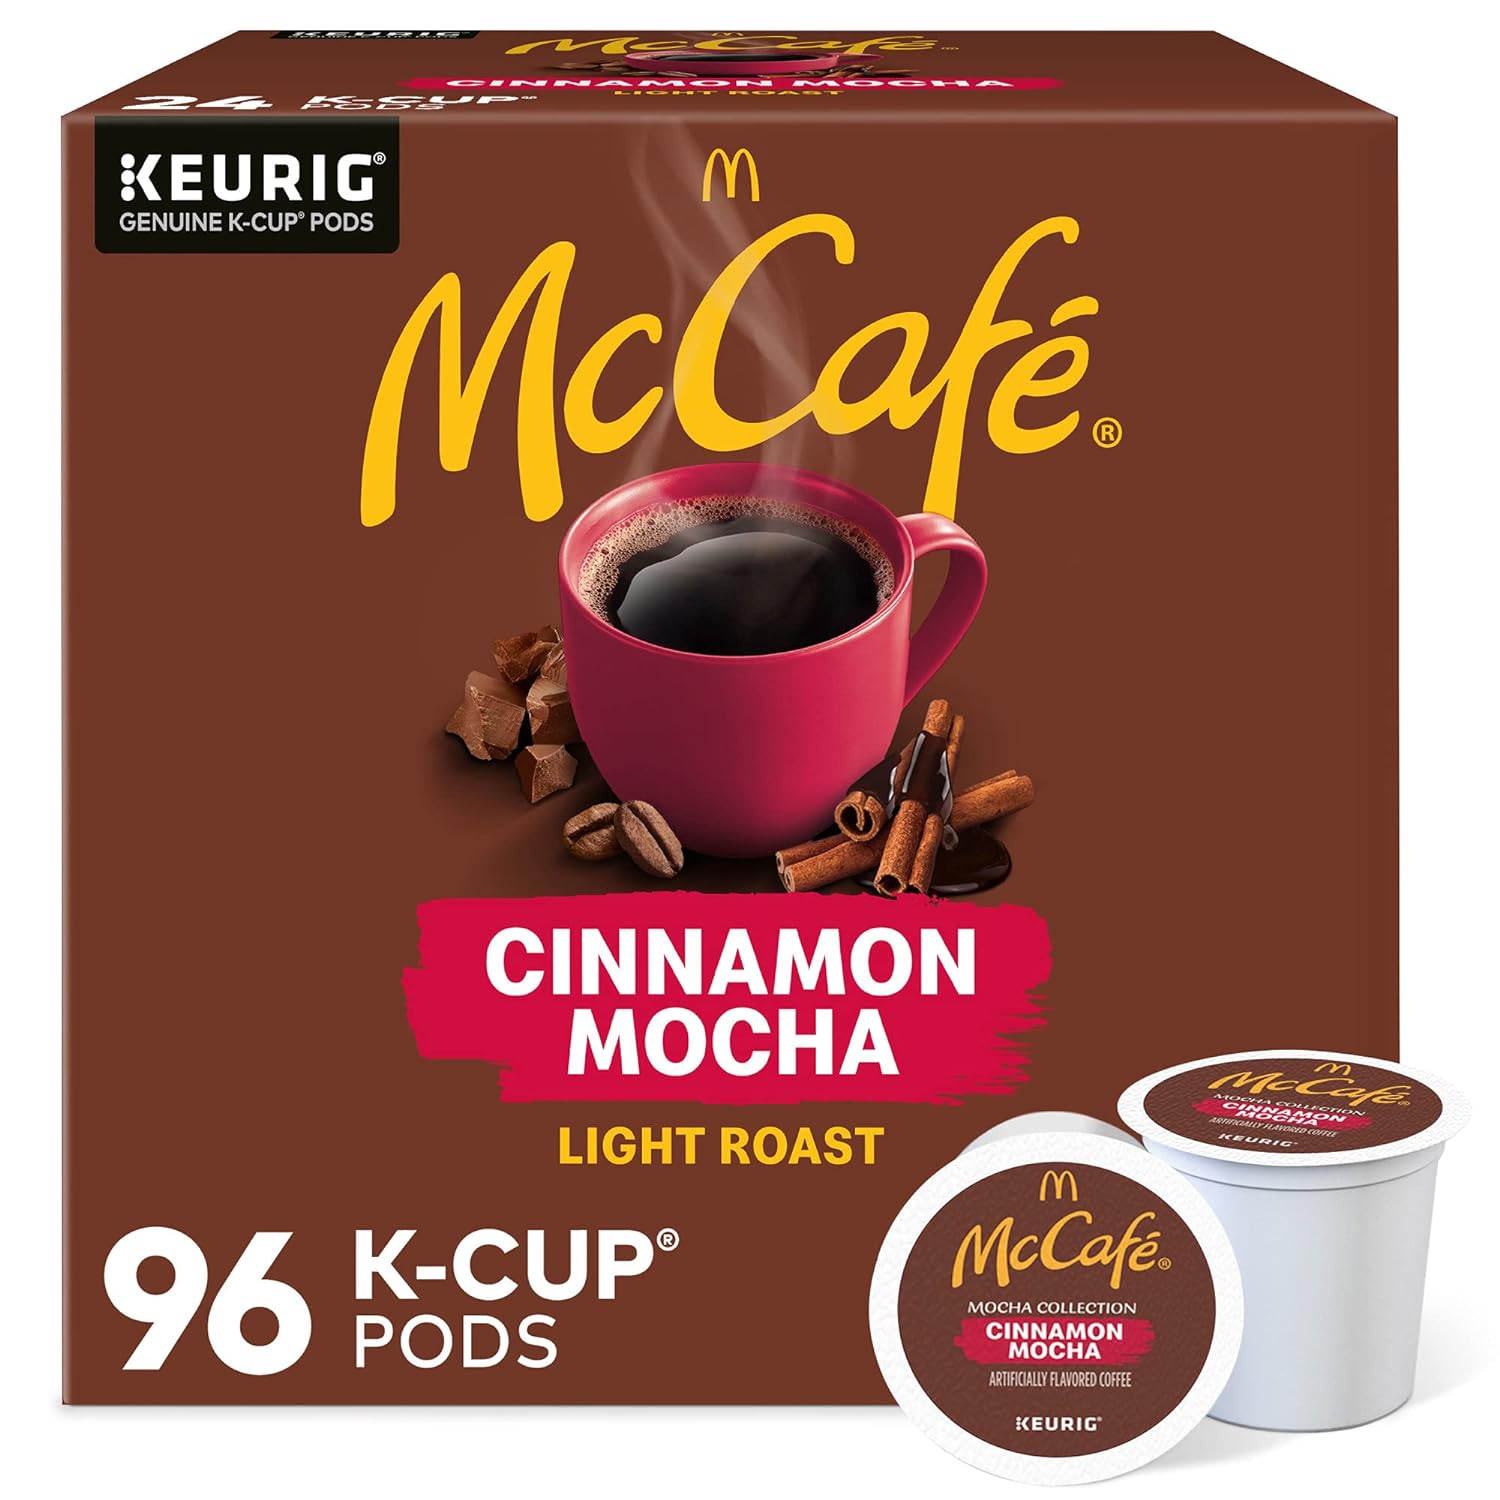 McCafe Cinnamon Mocha, Single-Serve Keurig K-Cup Pods, Flavored Light Roast Coffee Pods Pods, 96 Count